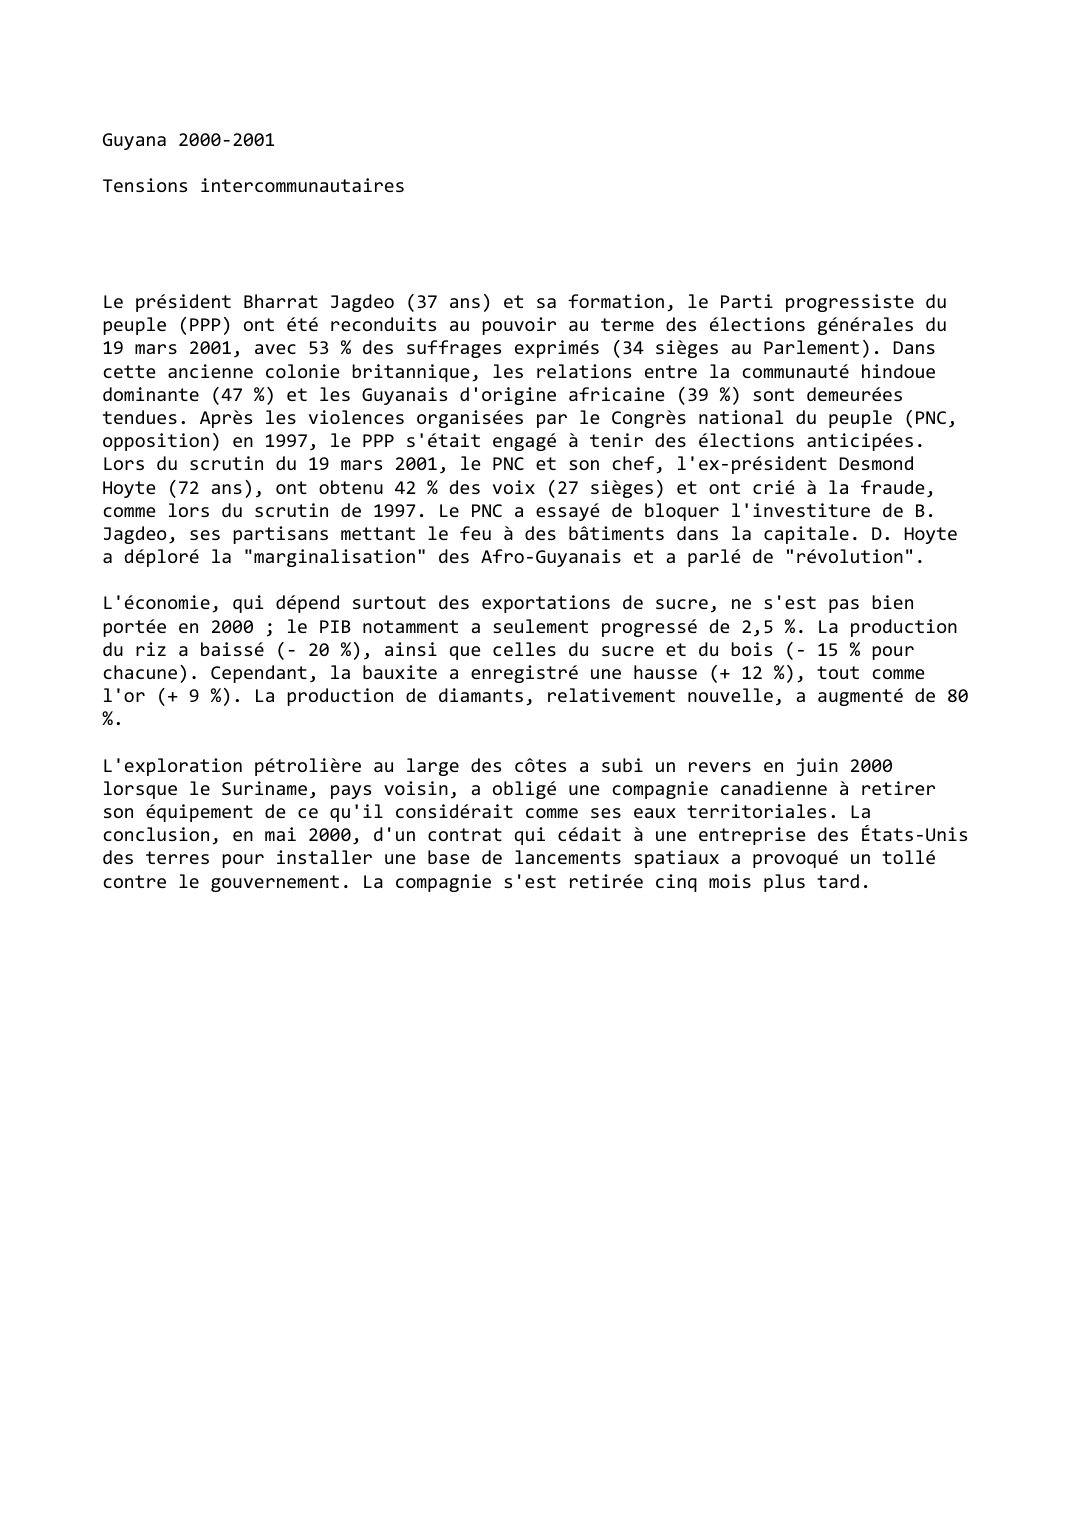 Prévisualisation du document Guyana (2000-2001): Tensions intercommunautaires